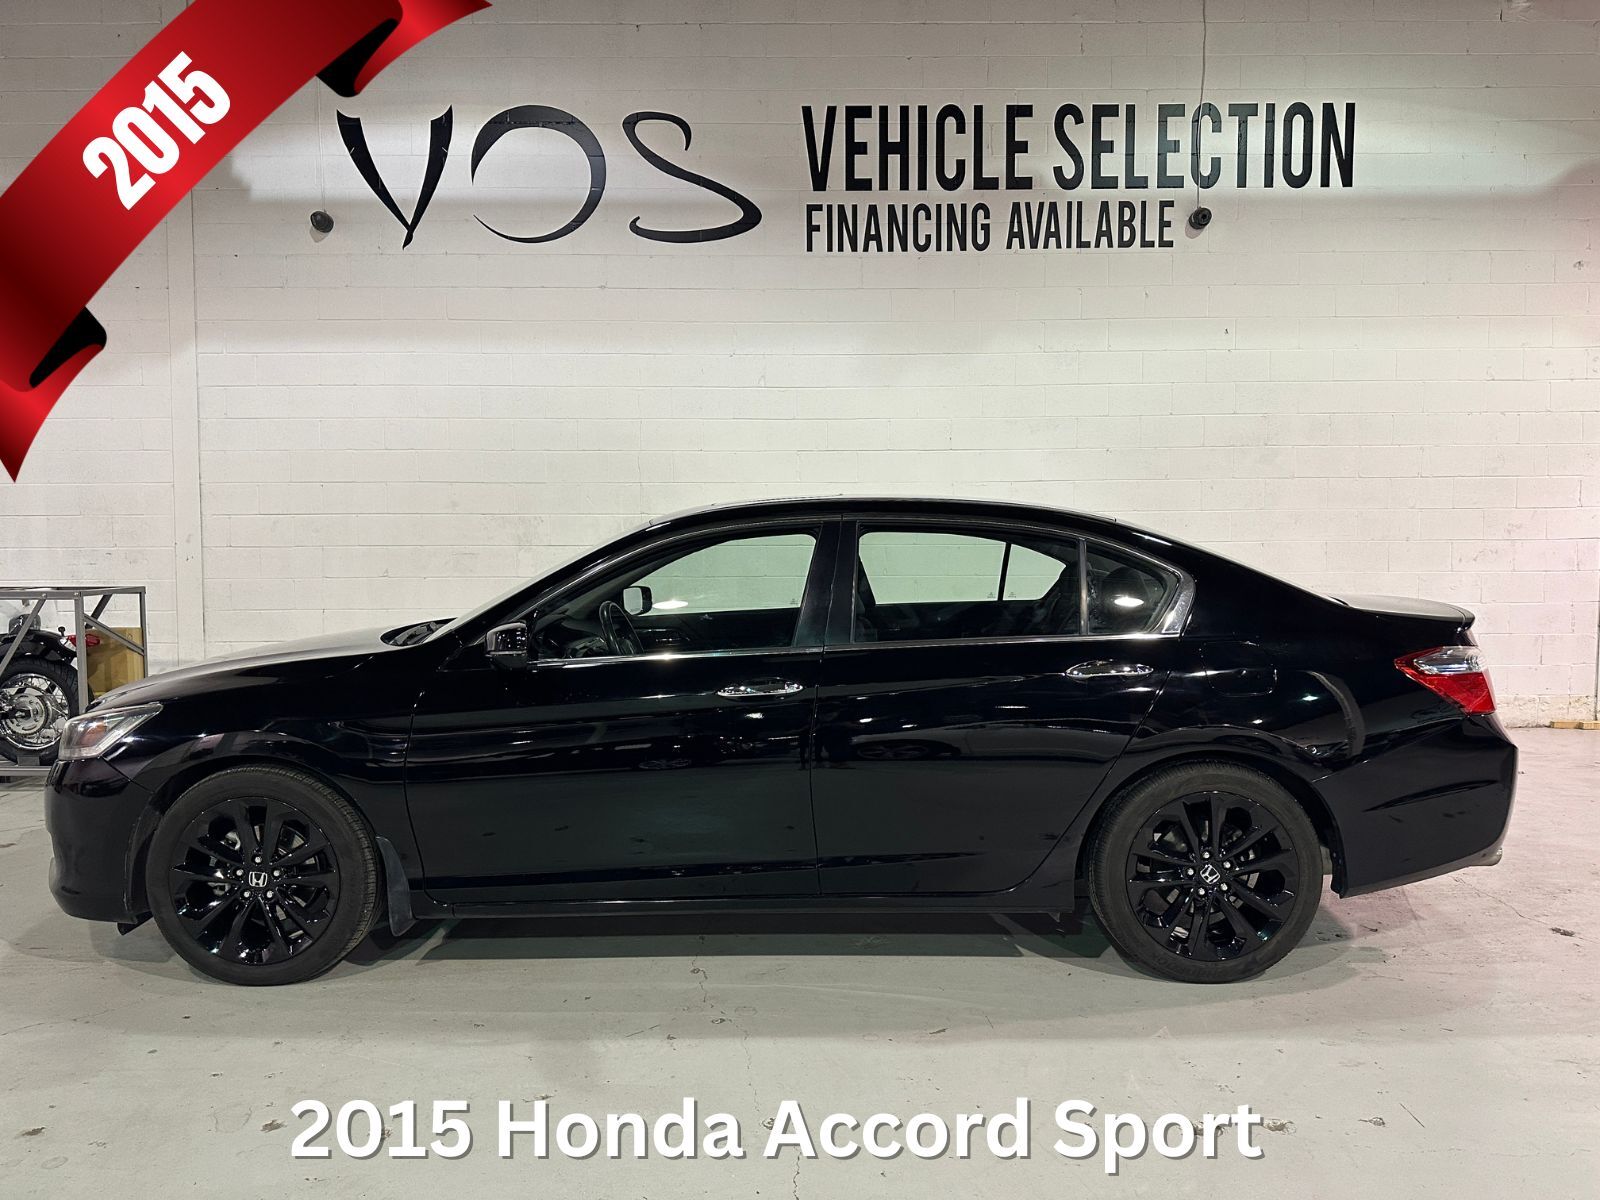 2015 Honda Accord Sport - V5829NP - -Financing Available**